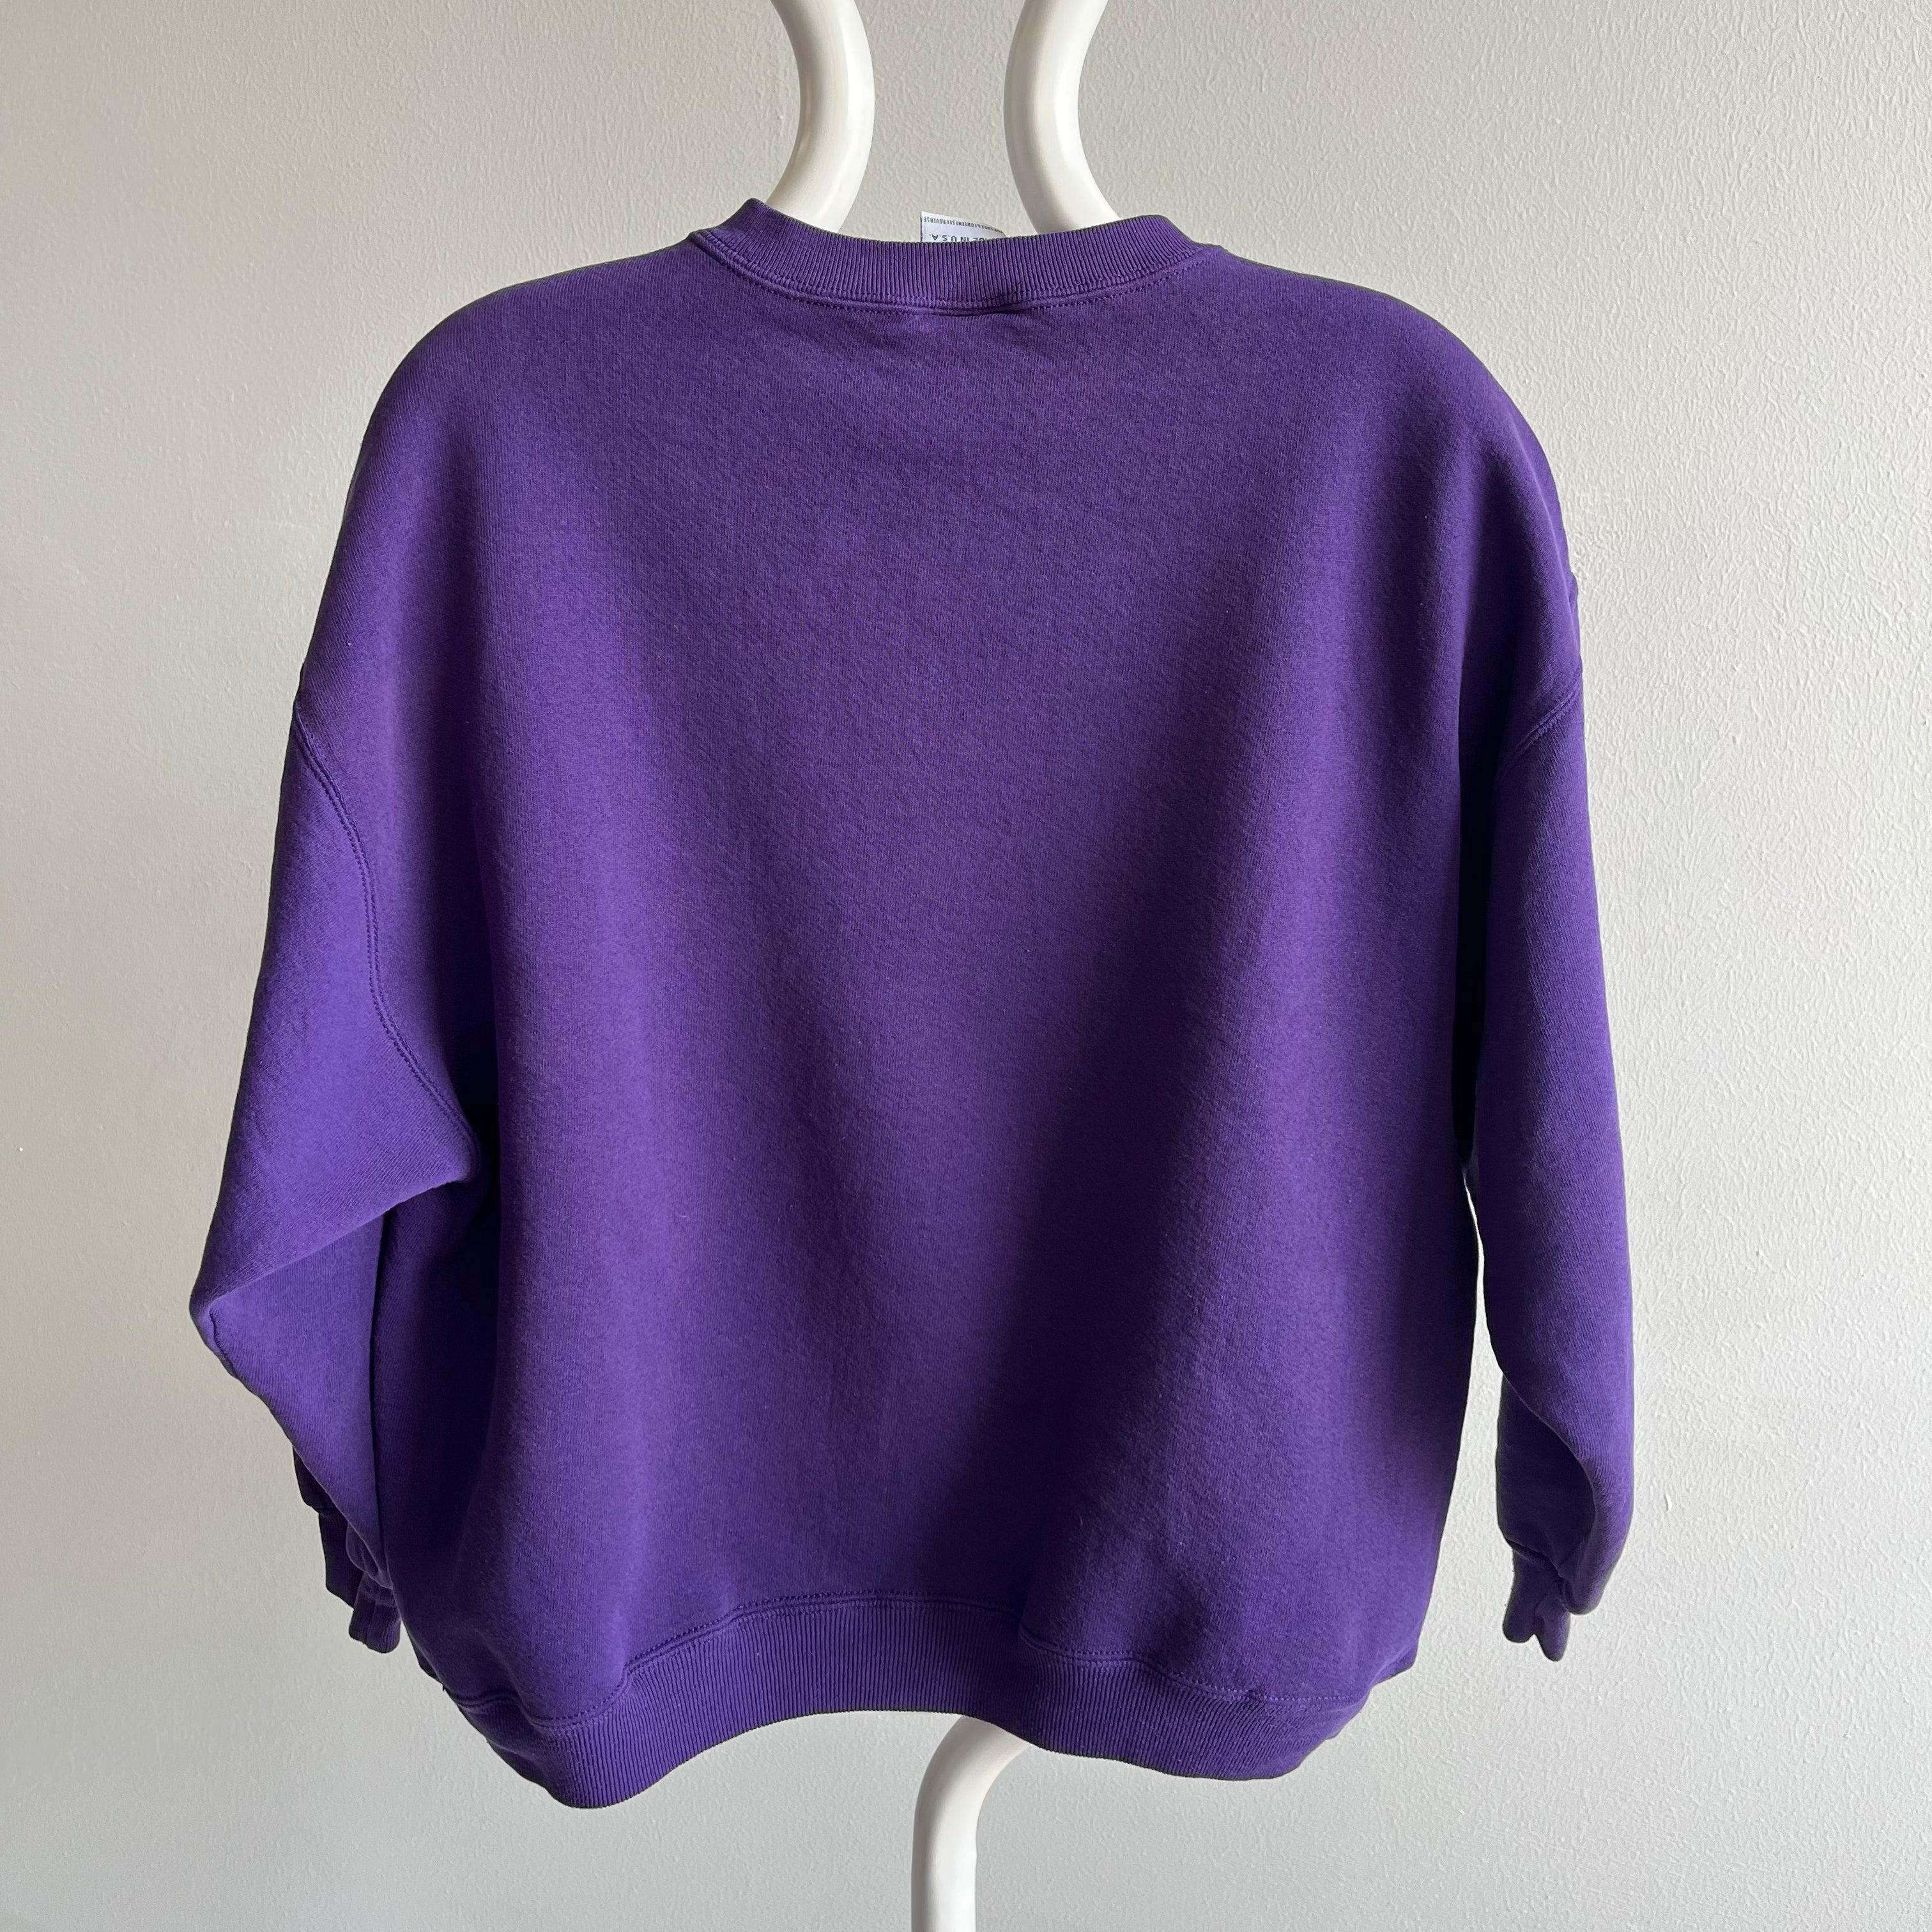 1980s Chic Brand (IYKYK) Blank Purple Sweatshirt